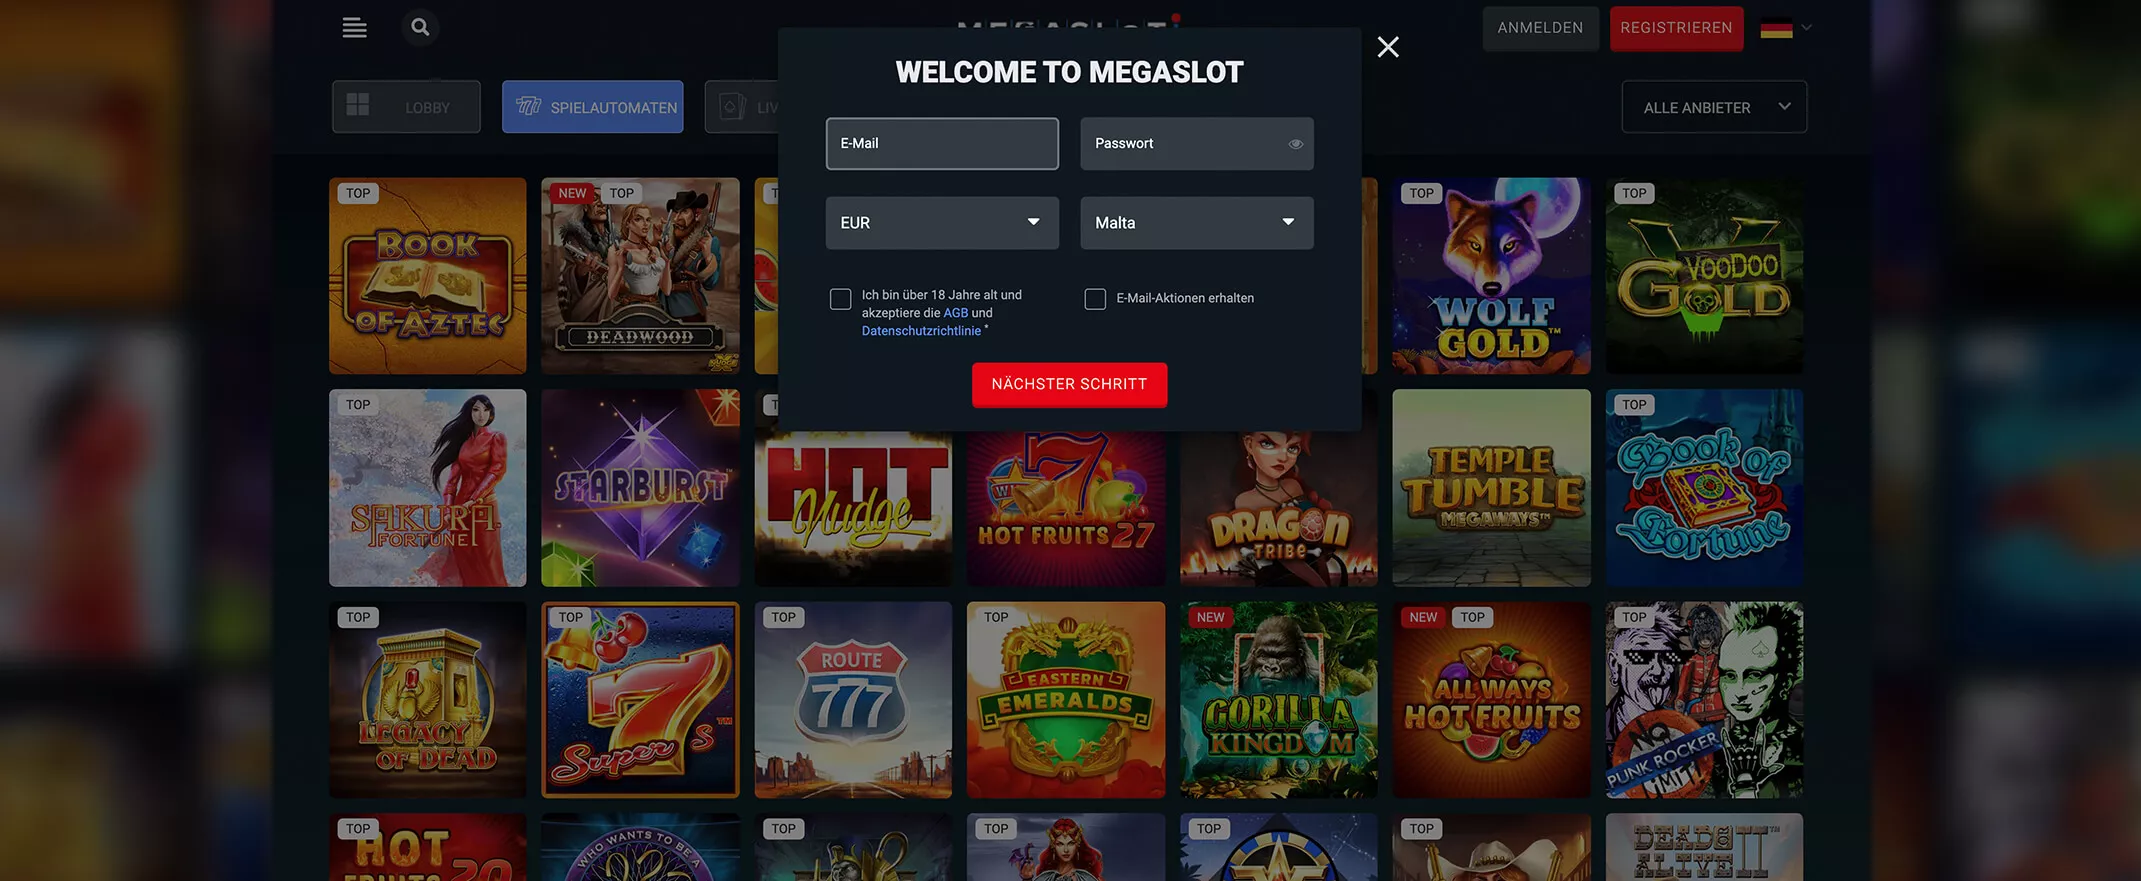 Megaslot Casino registrierung